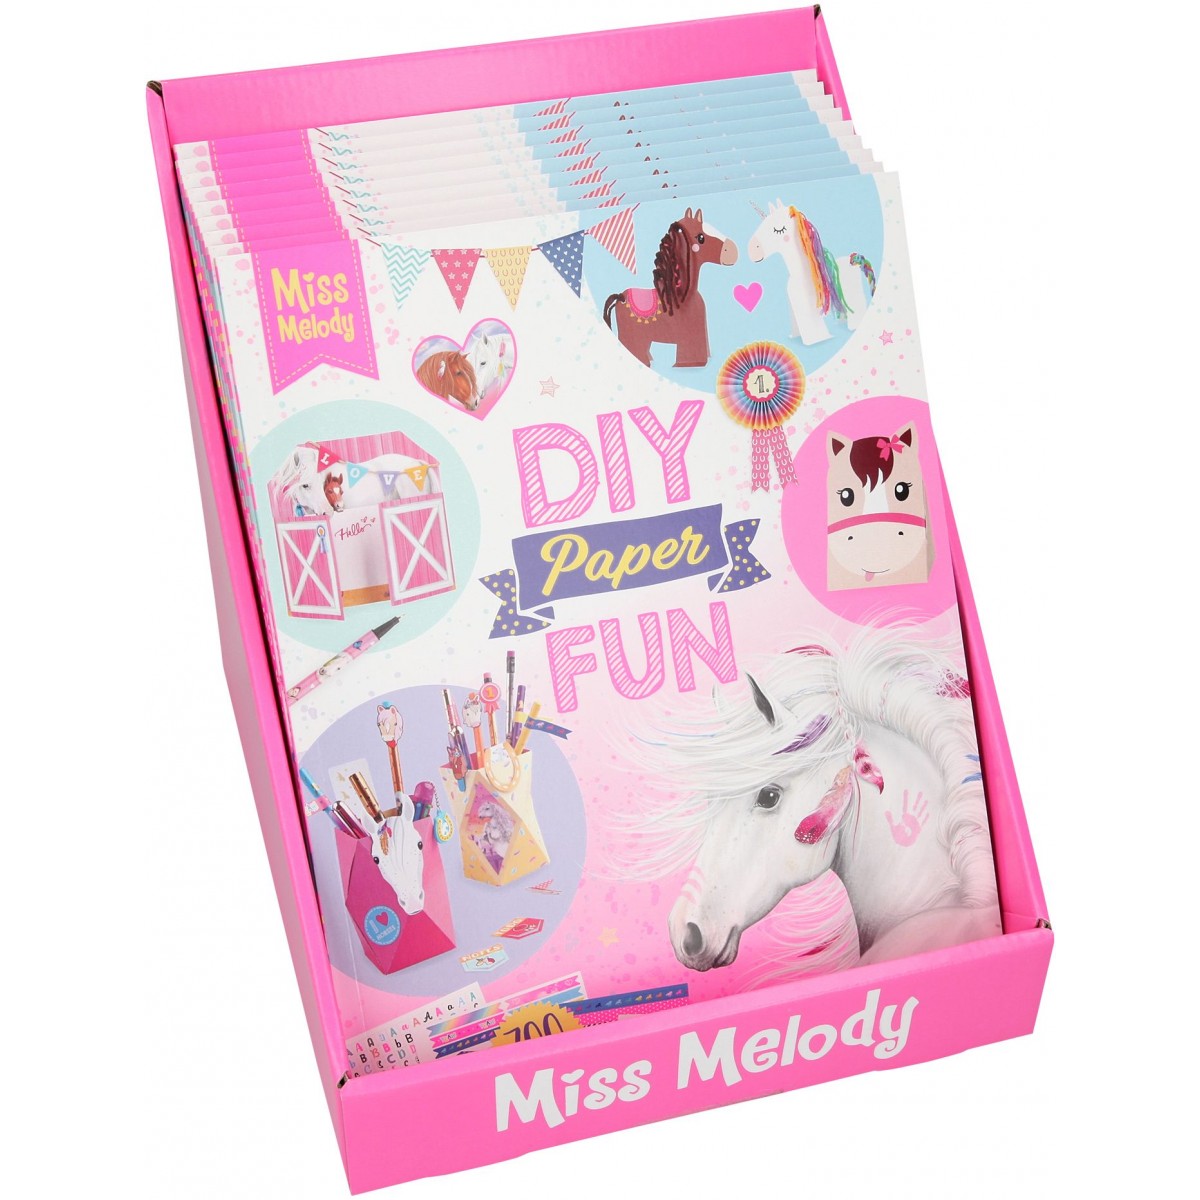 Depesche - Miss Melody - DIY Paper Fun Book